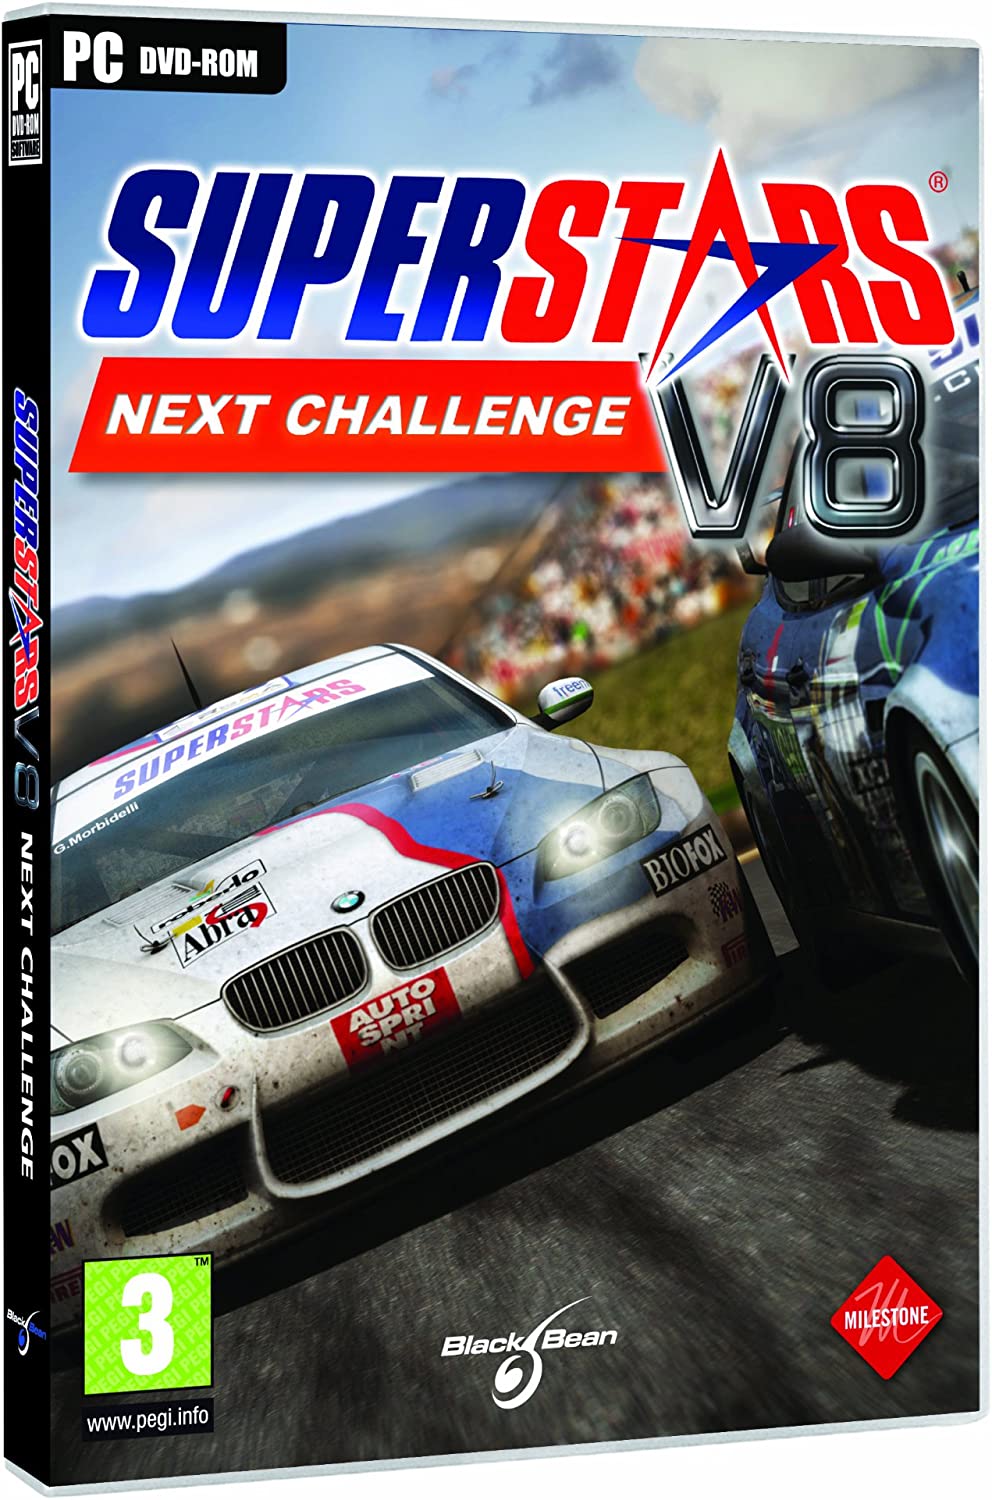 Superstar V8 Racing – Next Challenge (PC DVD)